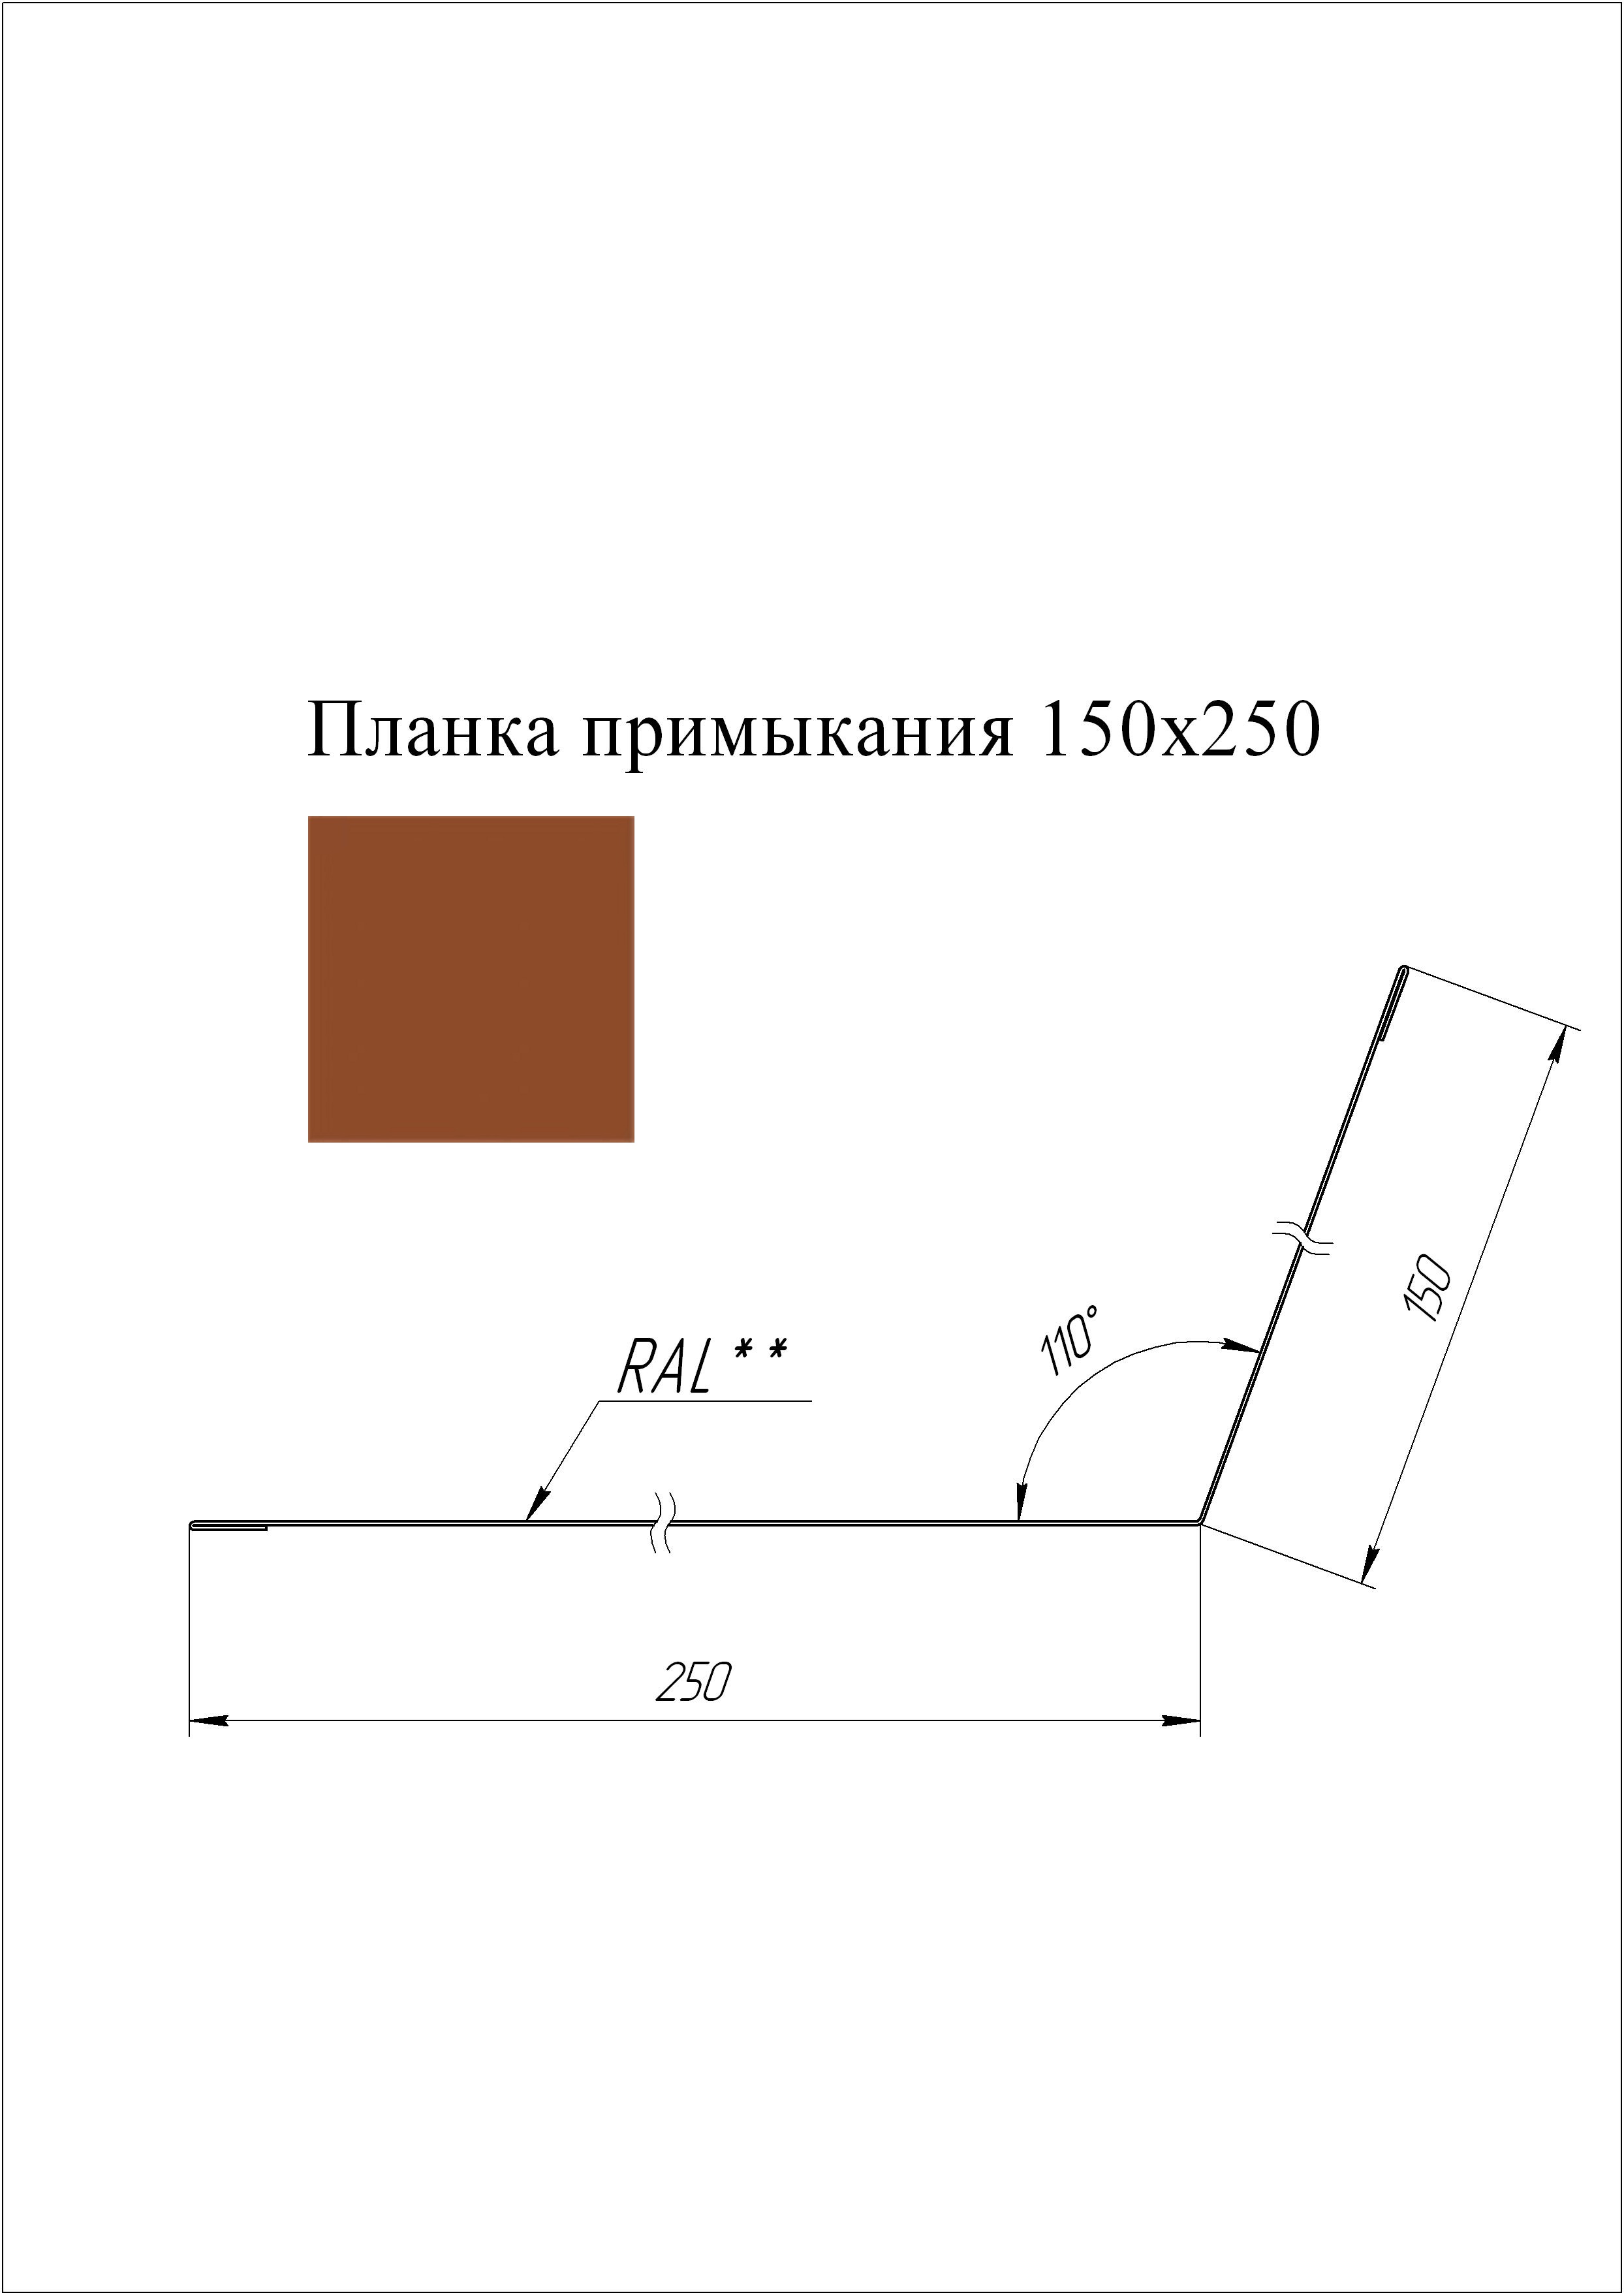 Планка примыкания 150*250 мм L=2 м GL Drap 0,45 RAL 8004 - коричневая медь